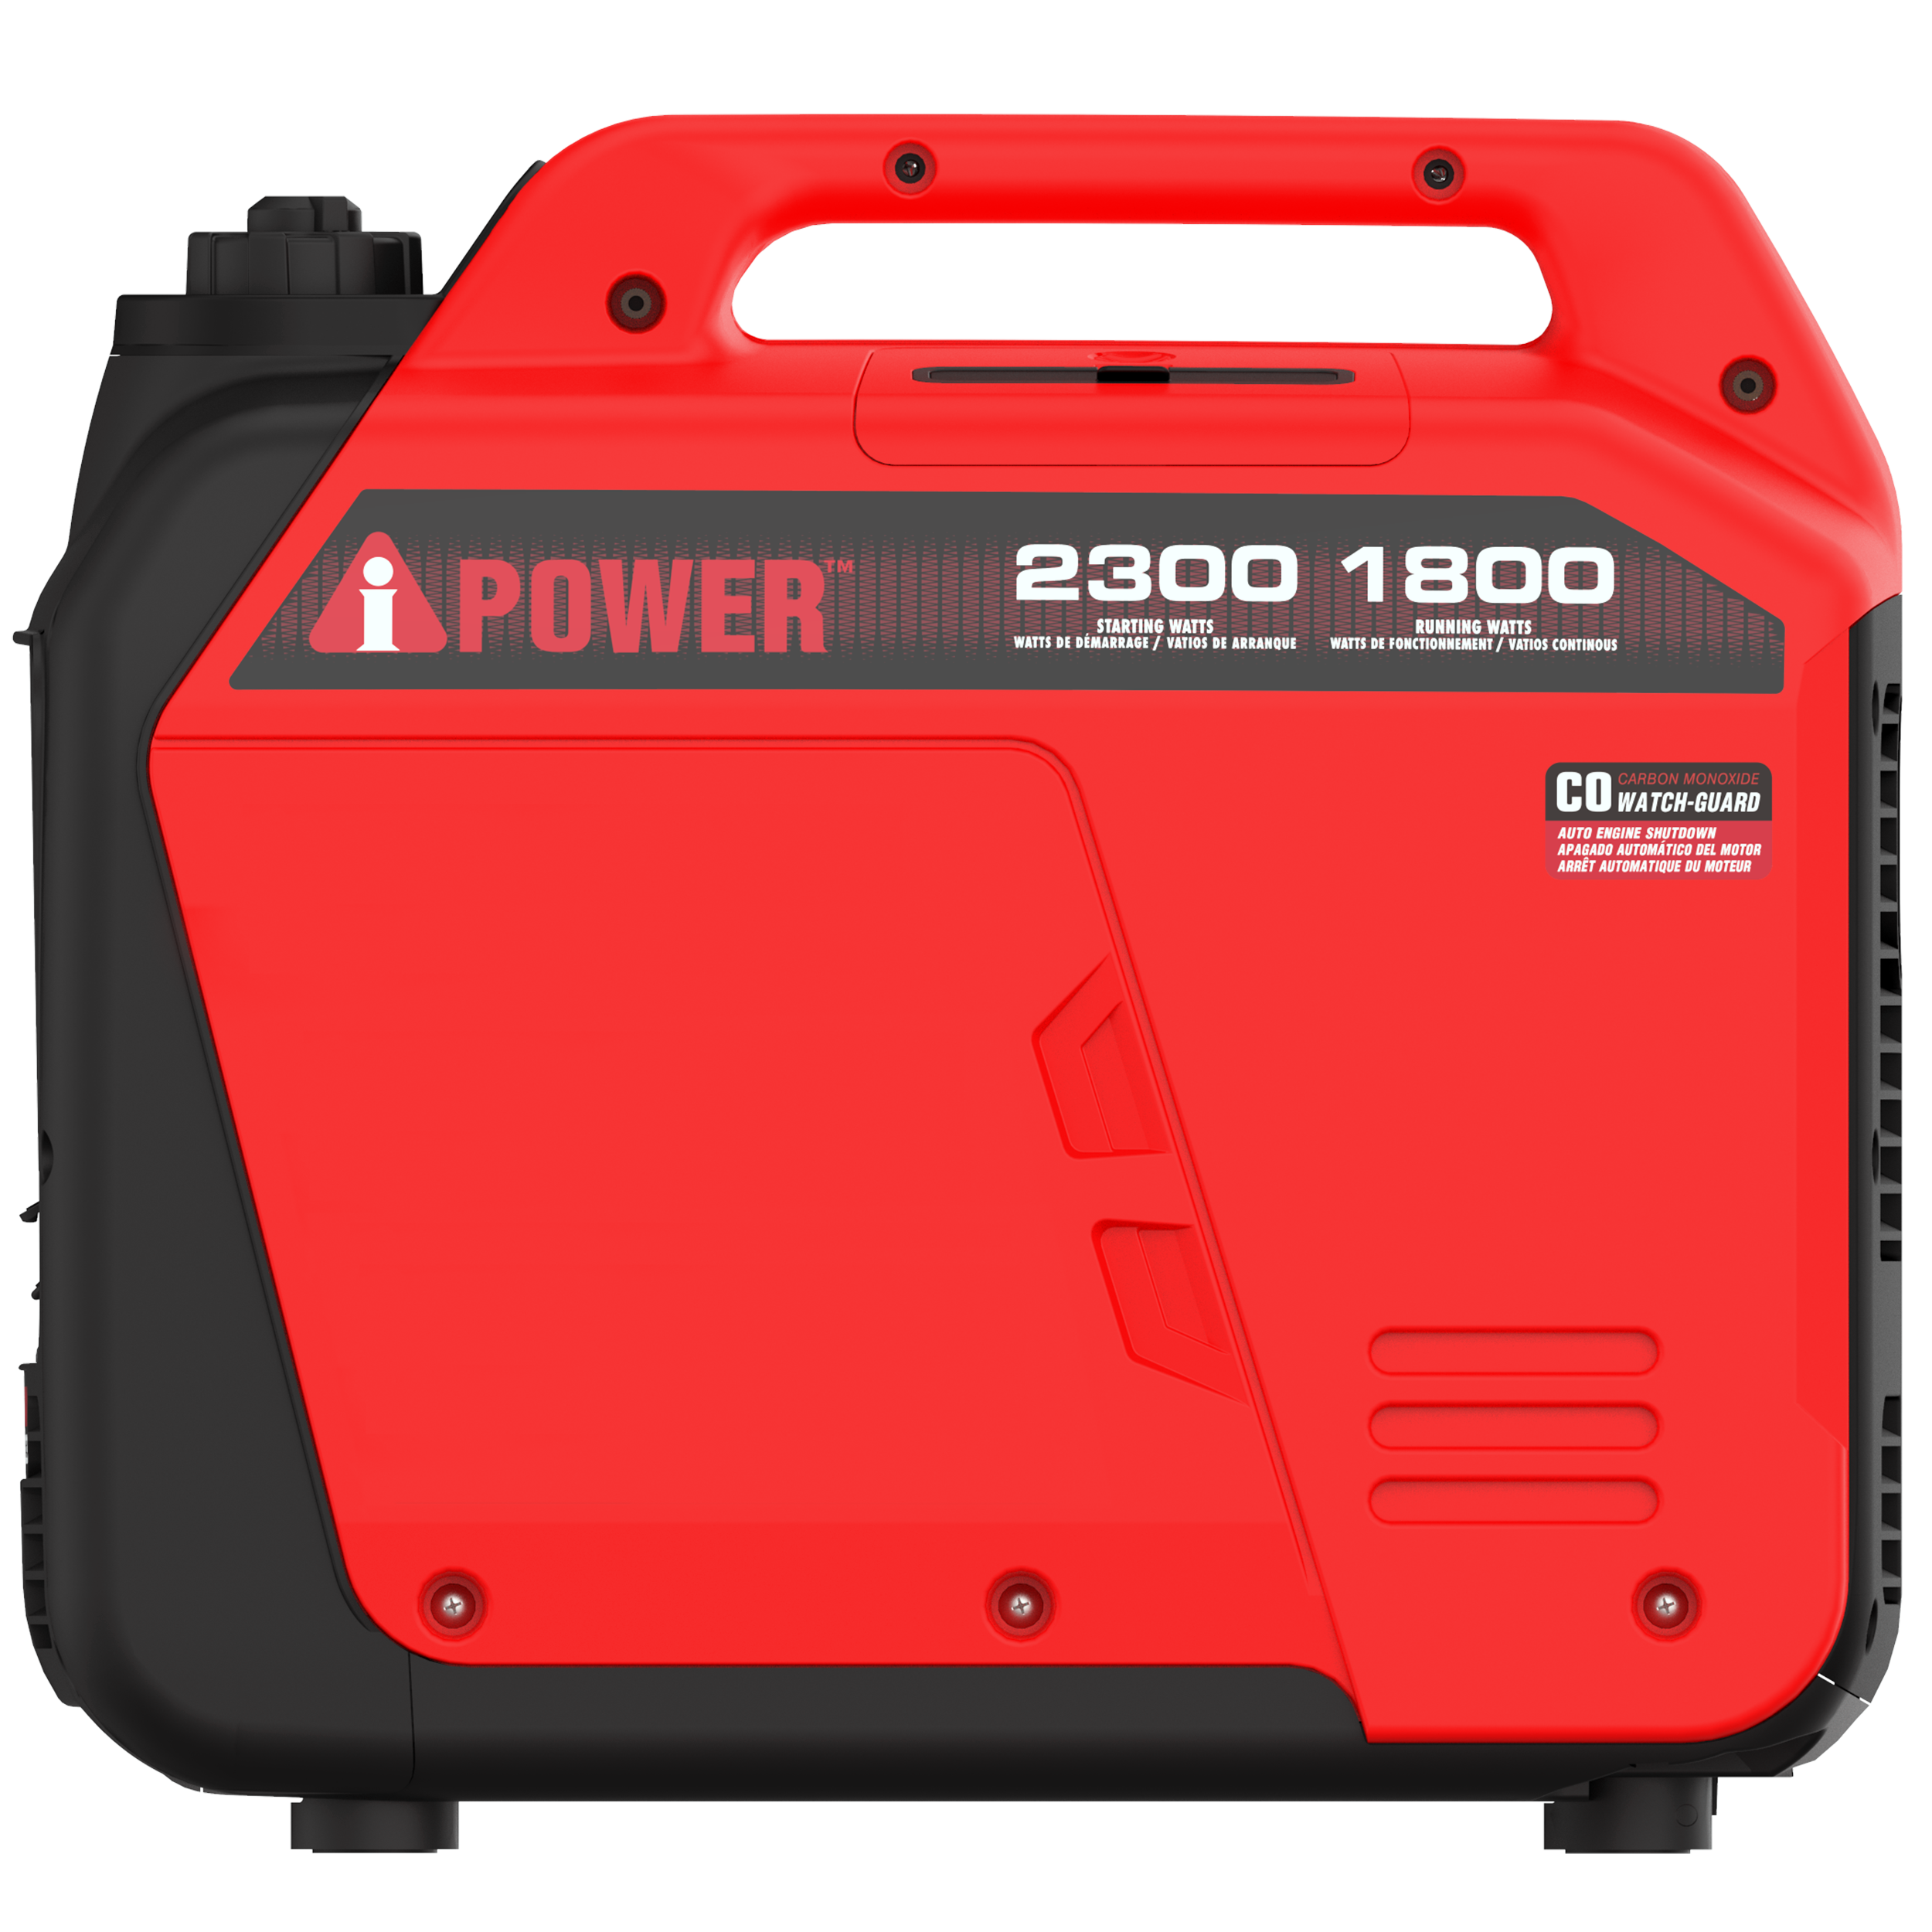 GXS2301i Inverter Generator